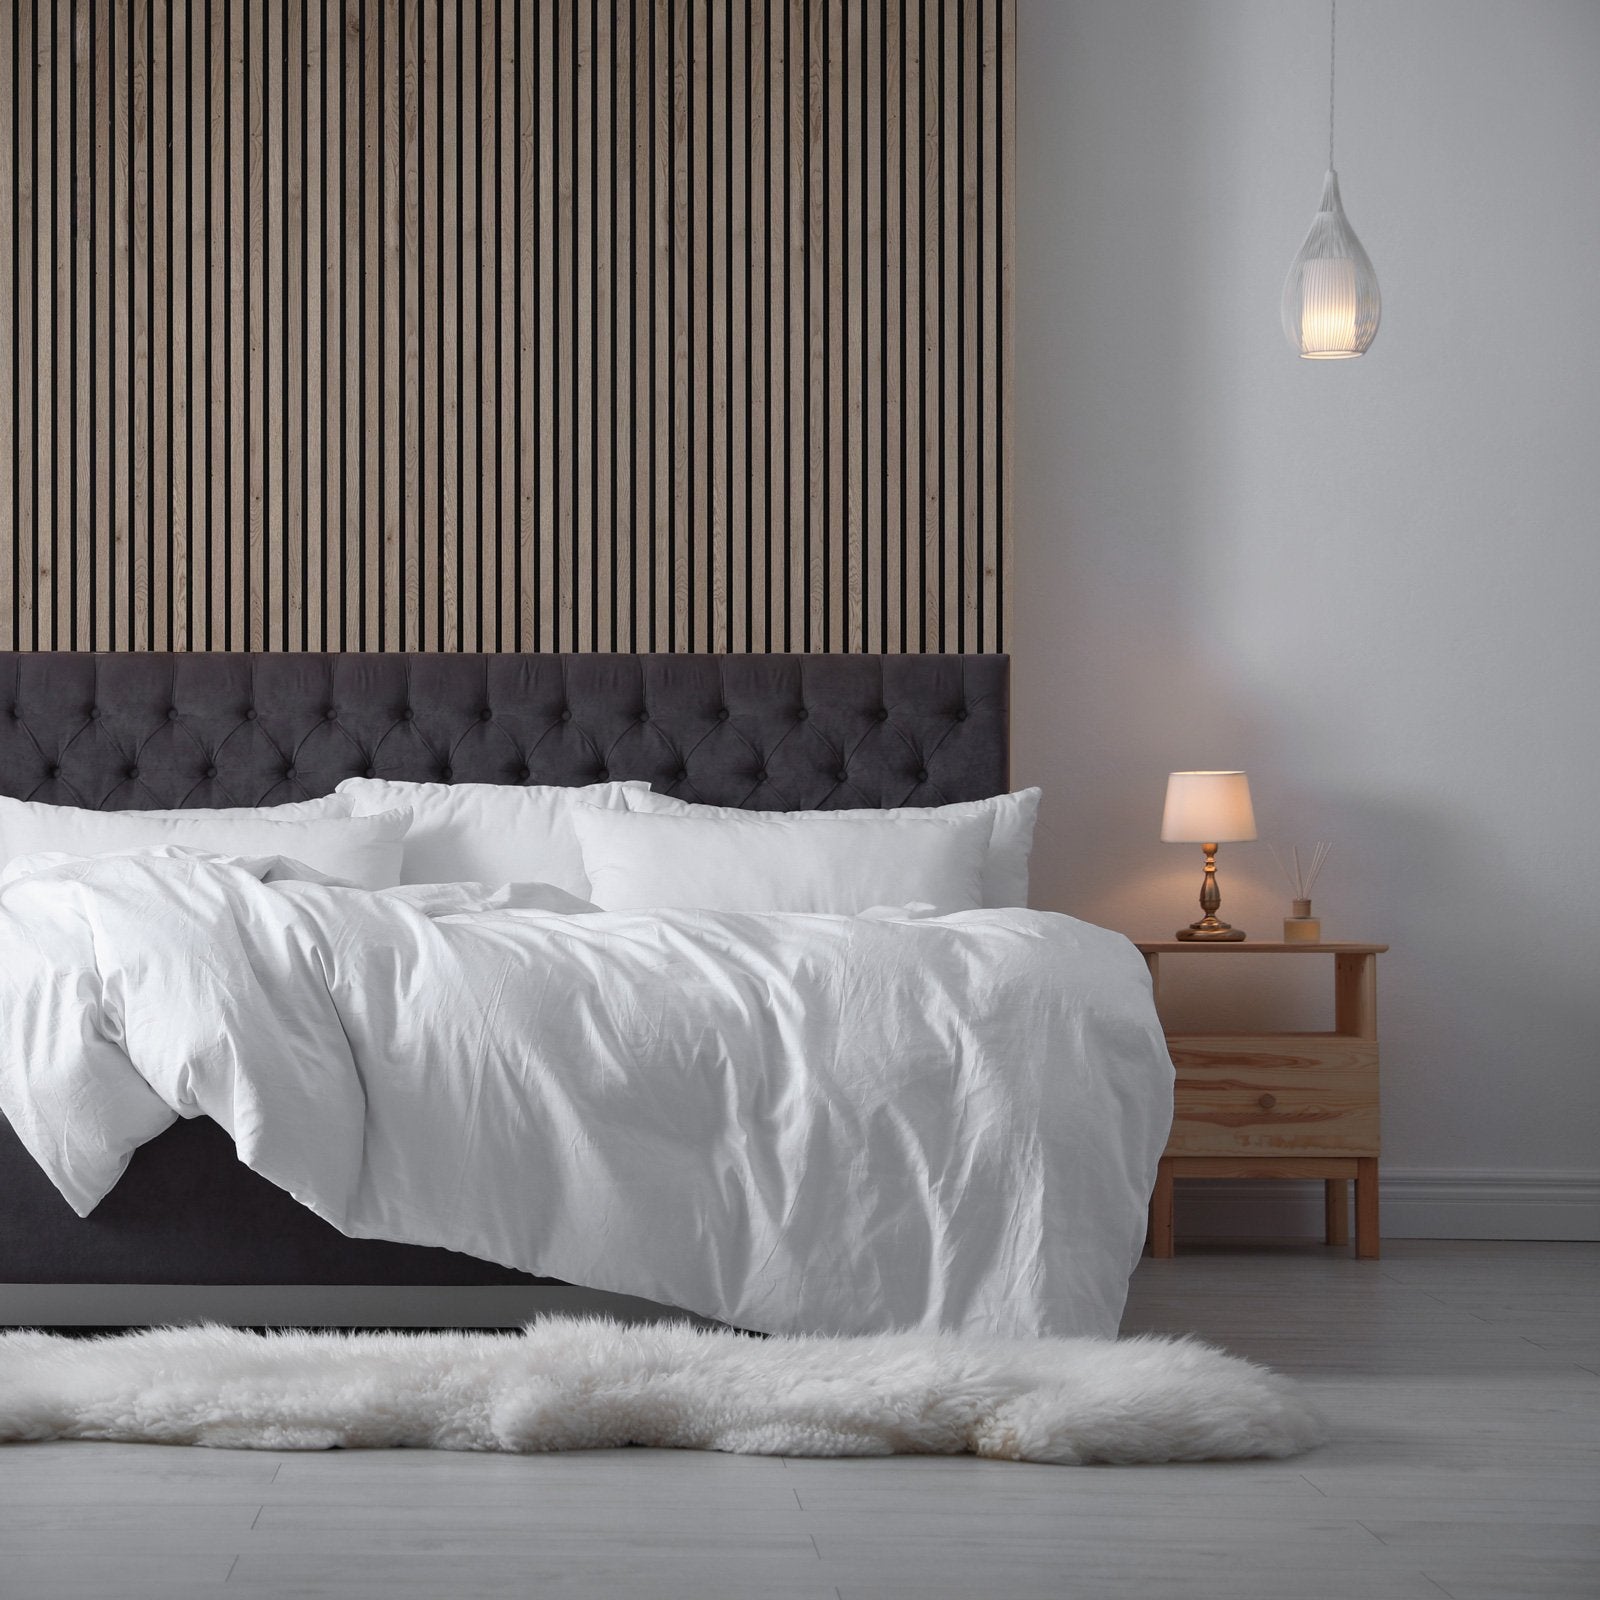 Acupanel Rustic Grey Acoustic Wood Wall Panels - Bedroom